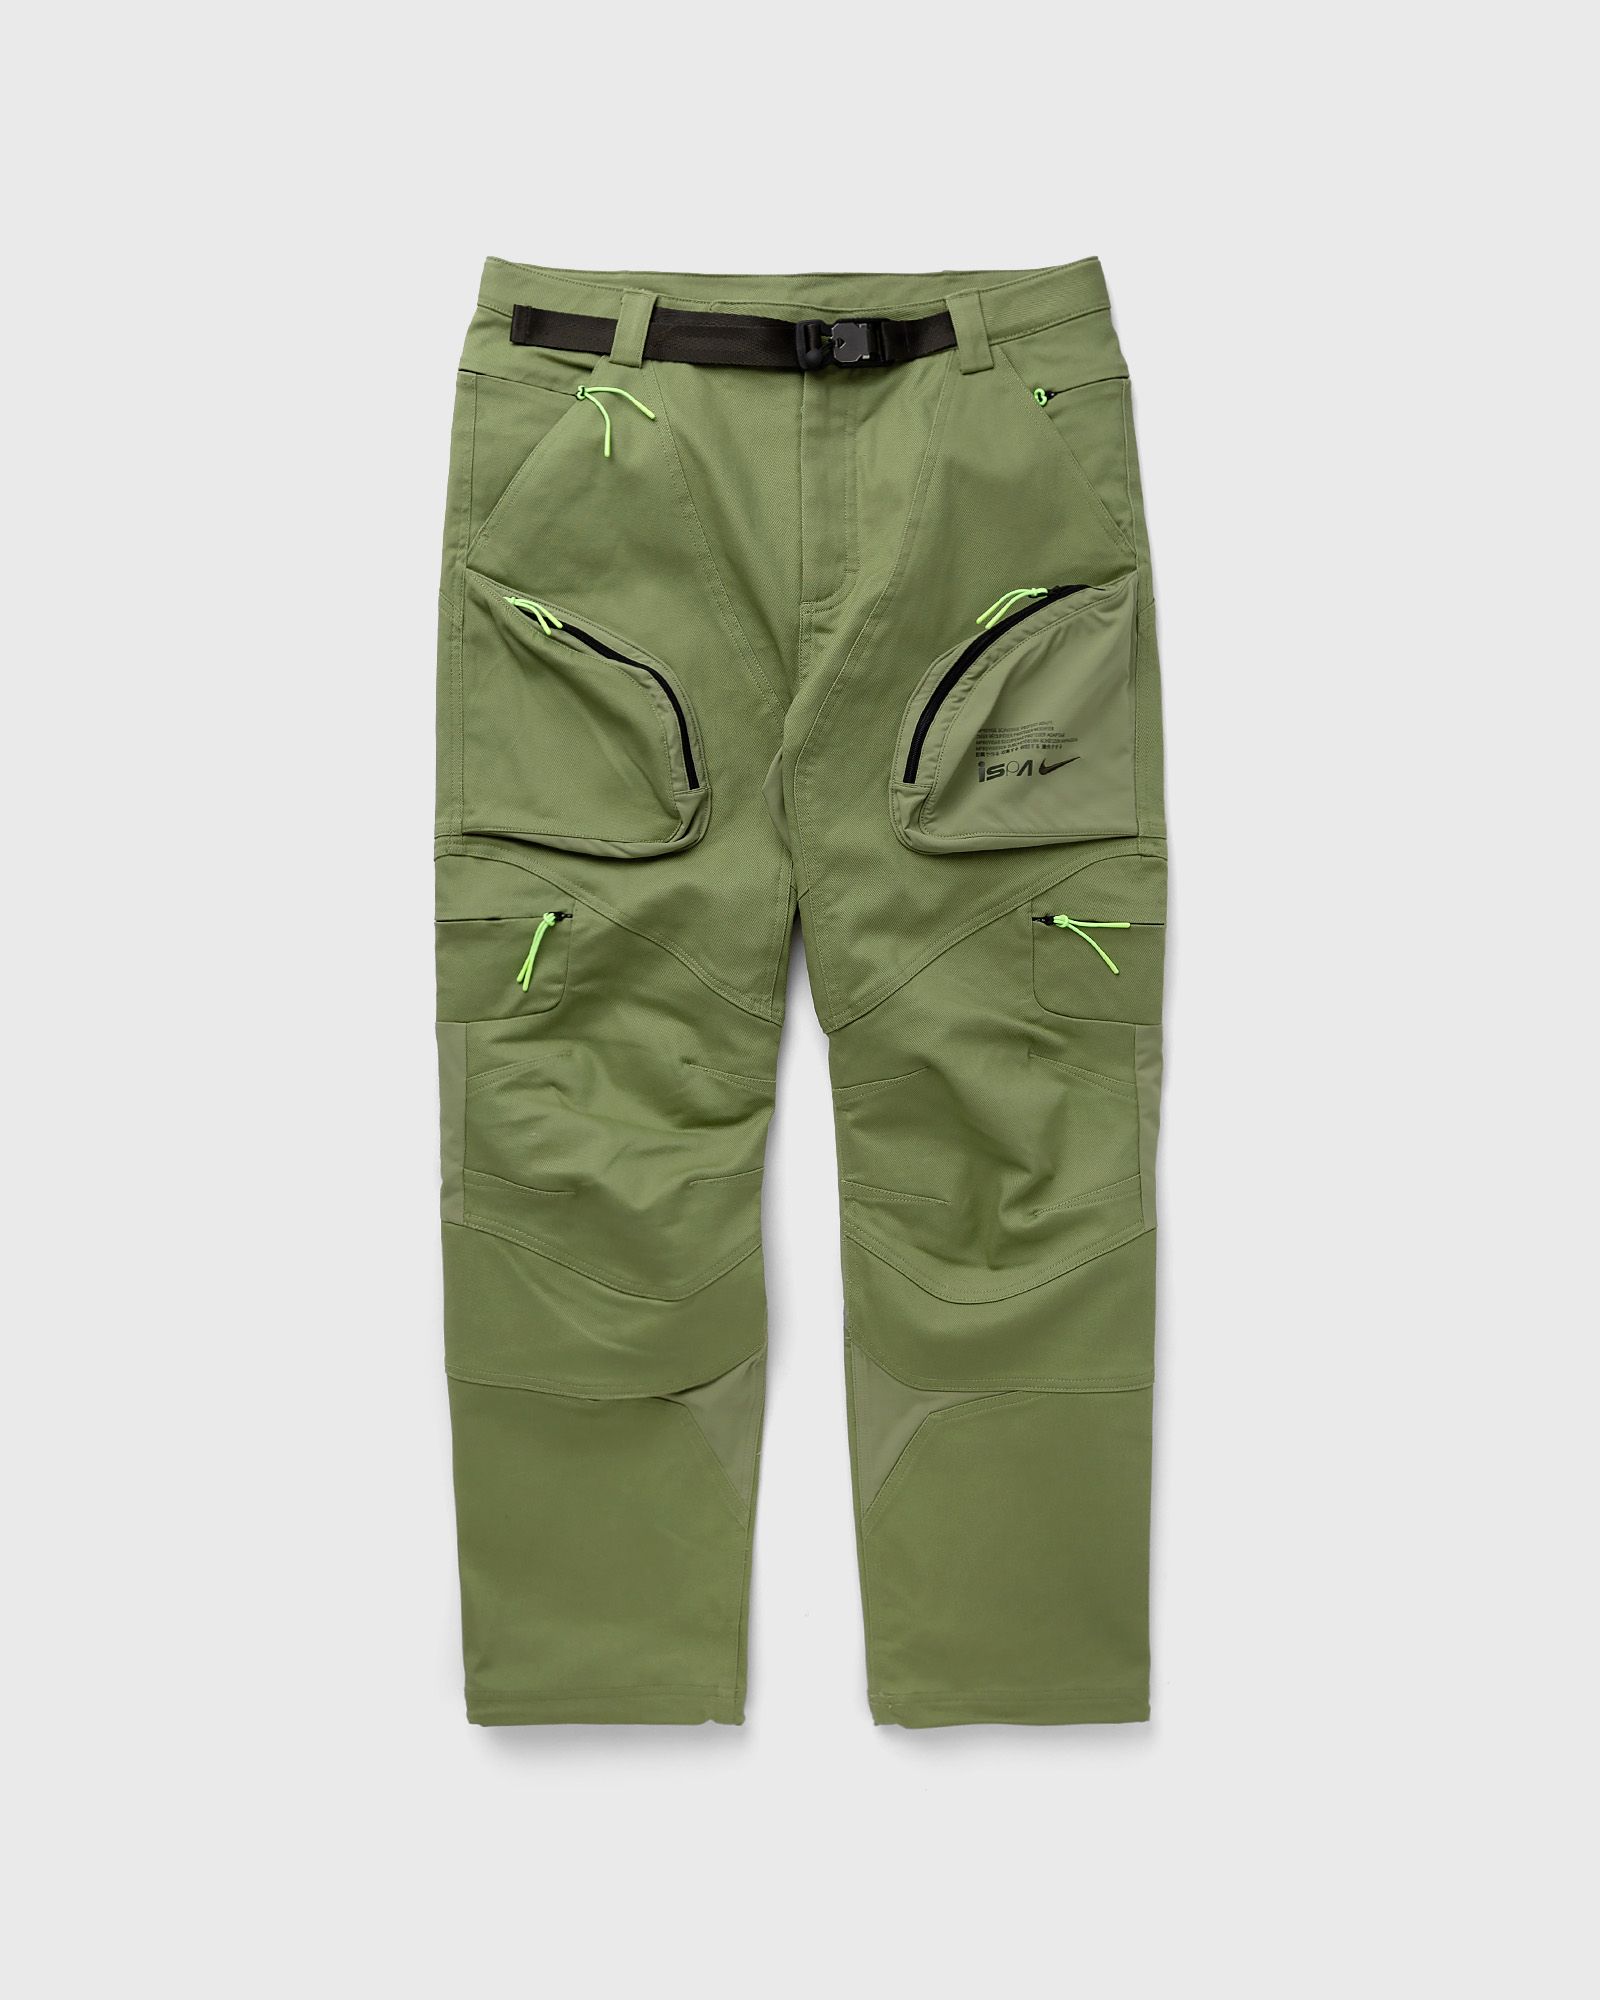 Nike - ispa pant 2.0 men cargo pants green in größe:m